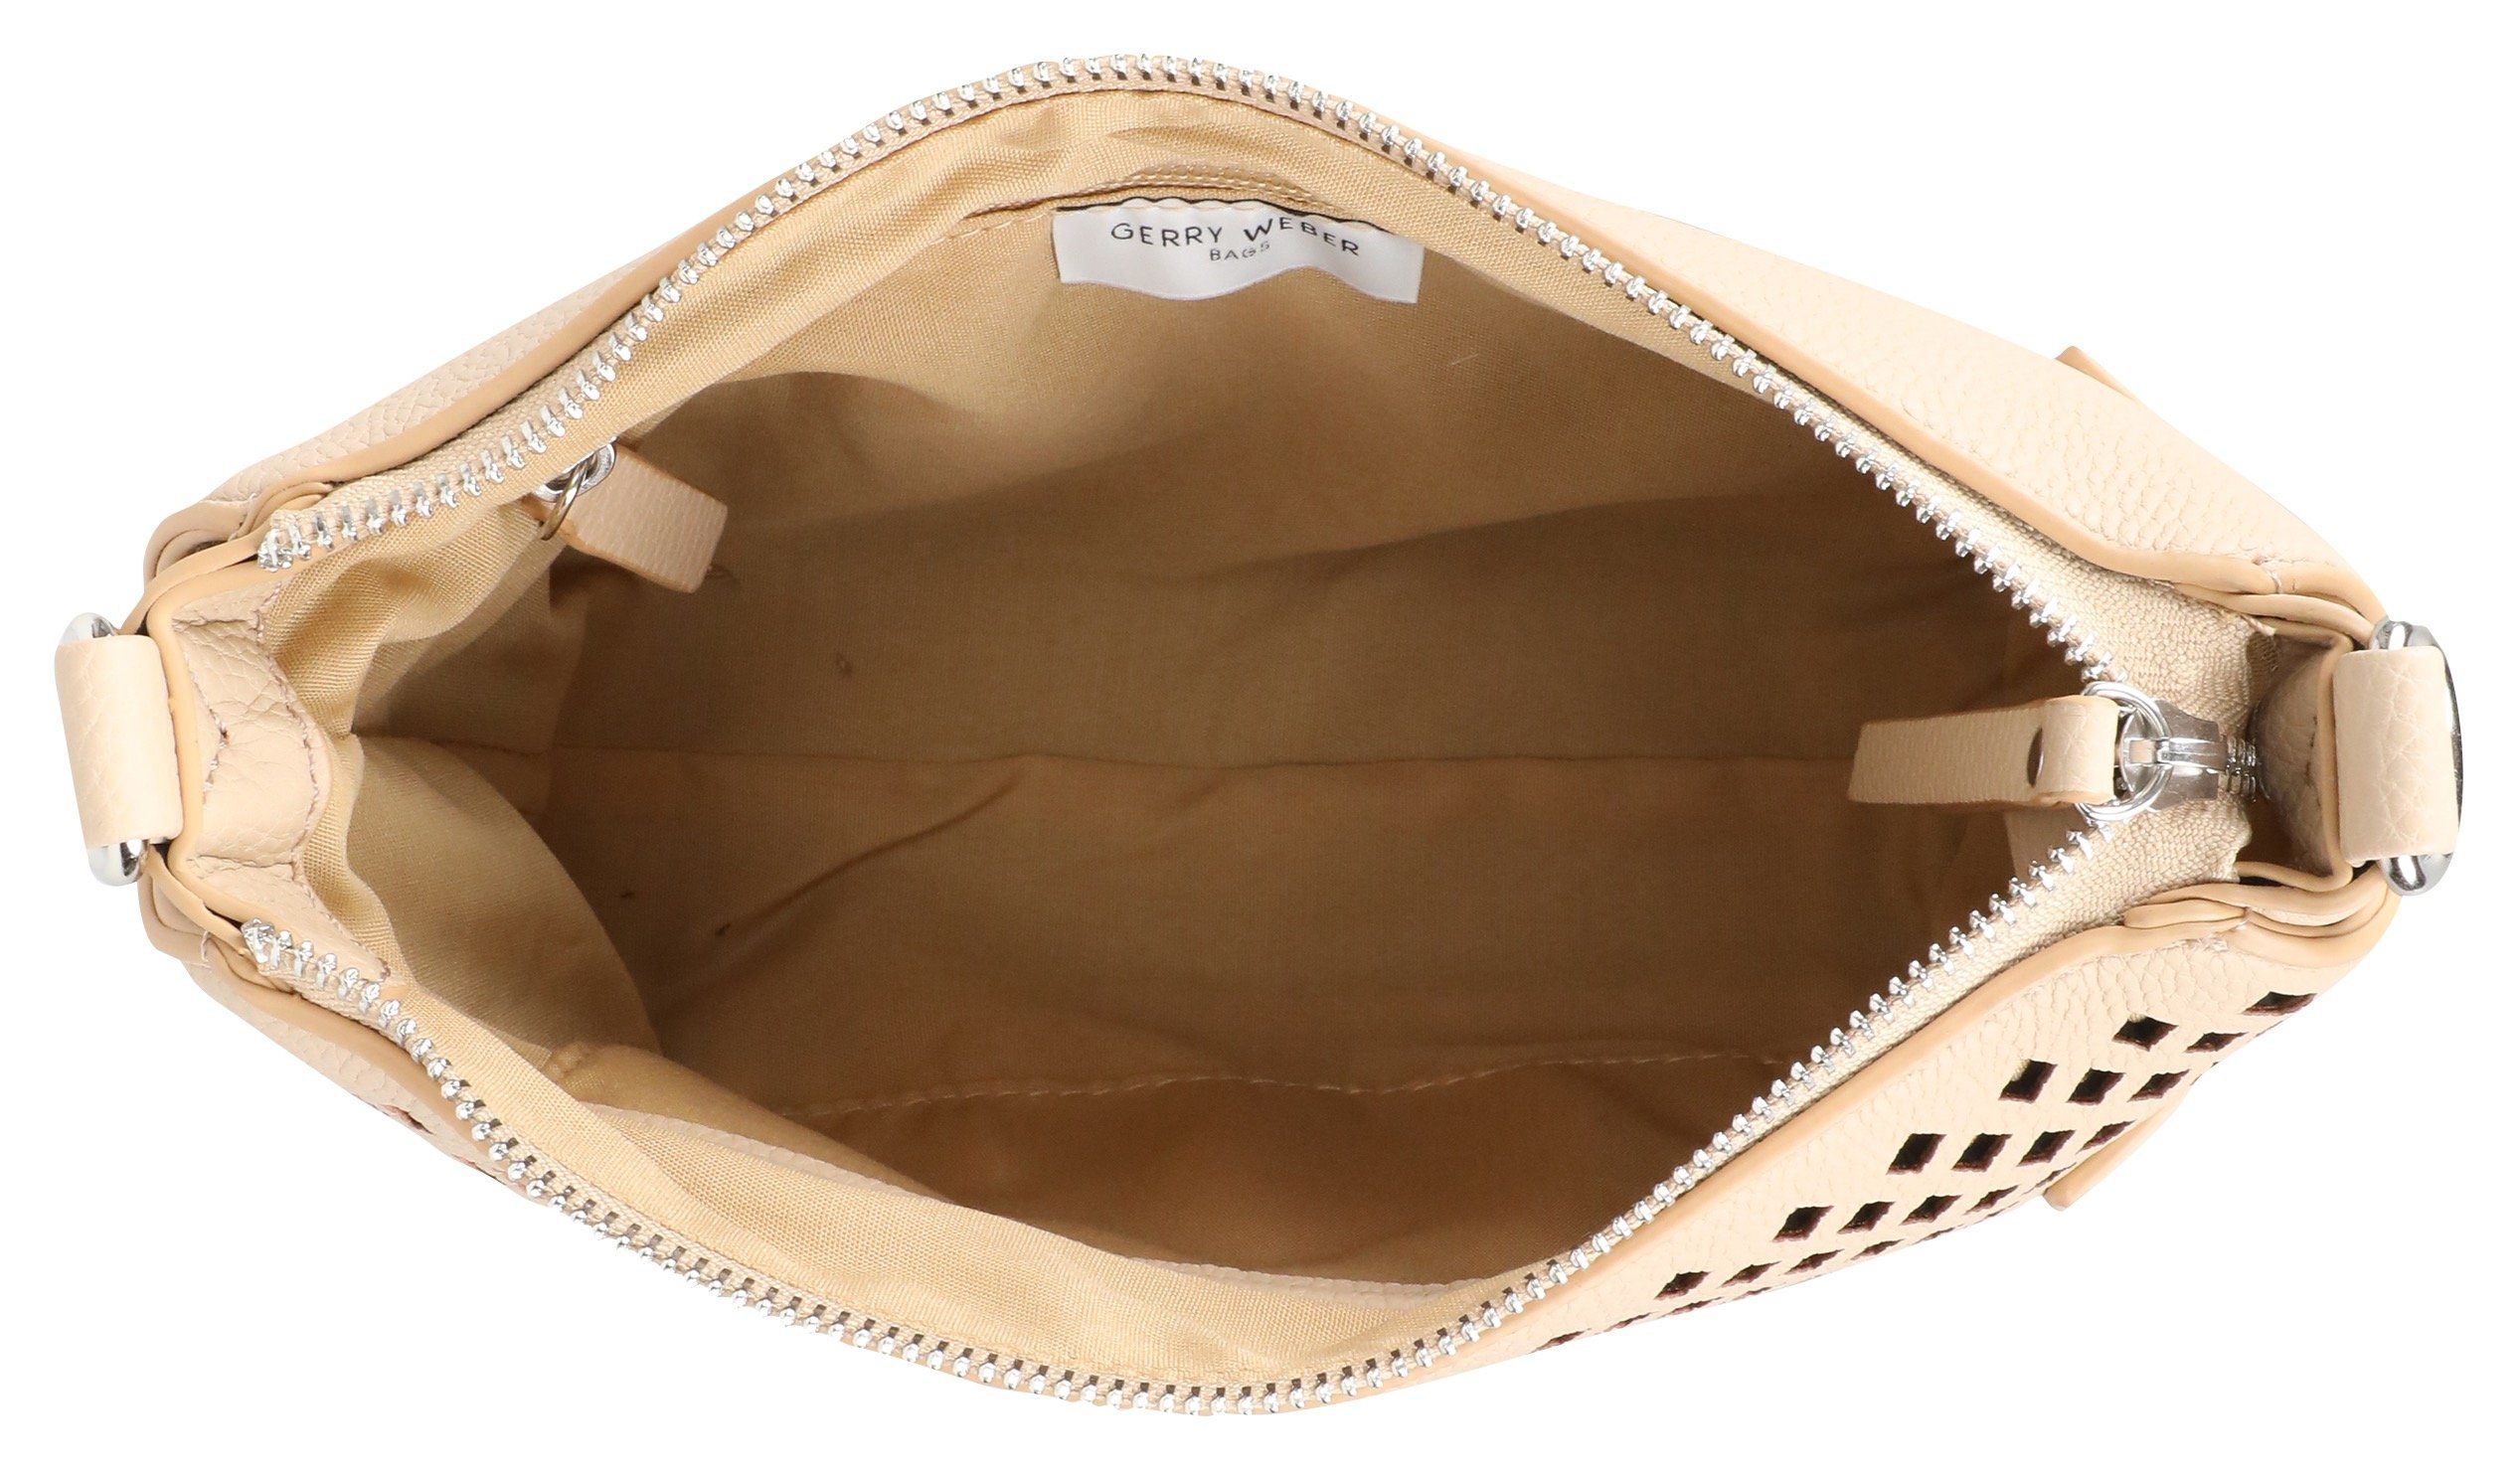 Damen Umhängetaschen GERRY WEBER Bags Umhängetasche summertime shoulderbag shz, mit modischen Cut outs im Material